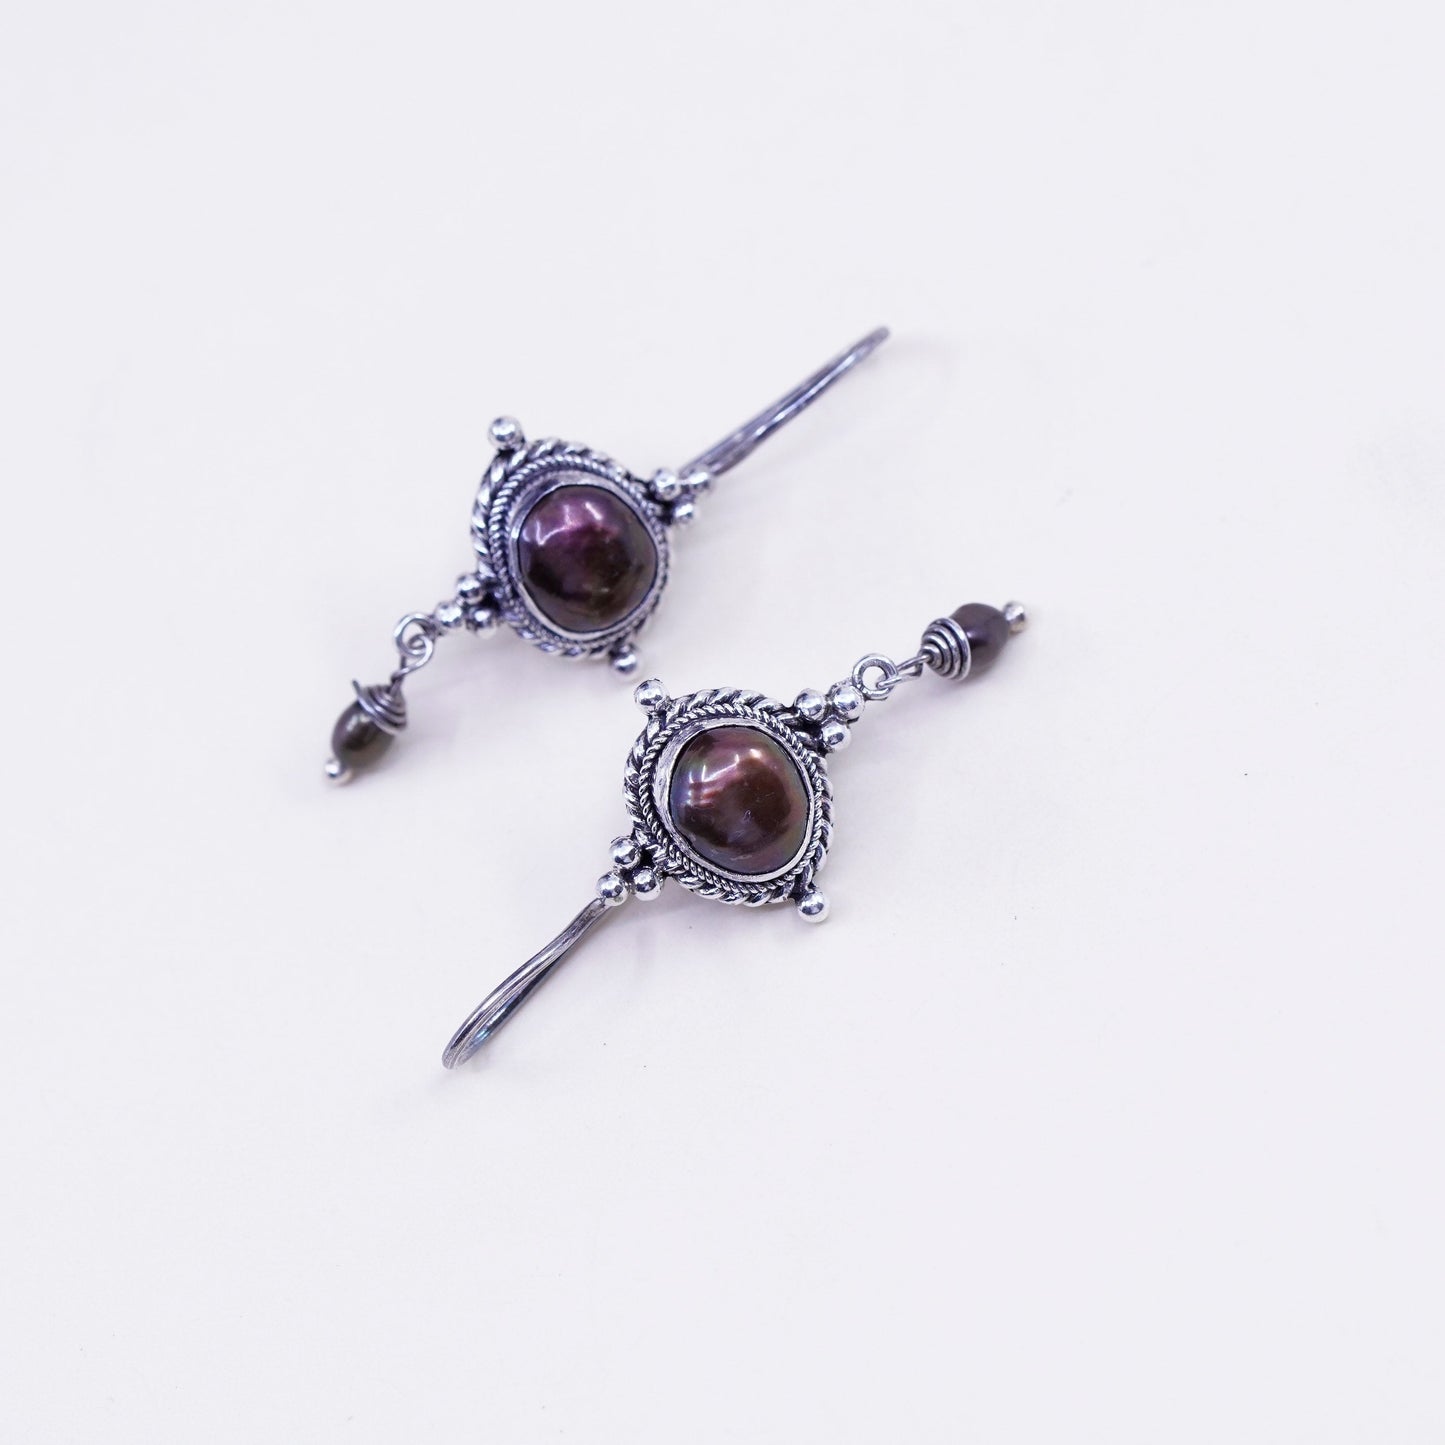 Vintage Sterling 925 silver handmade earrings with copper pearl drop